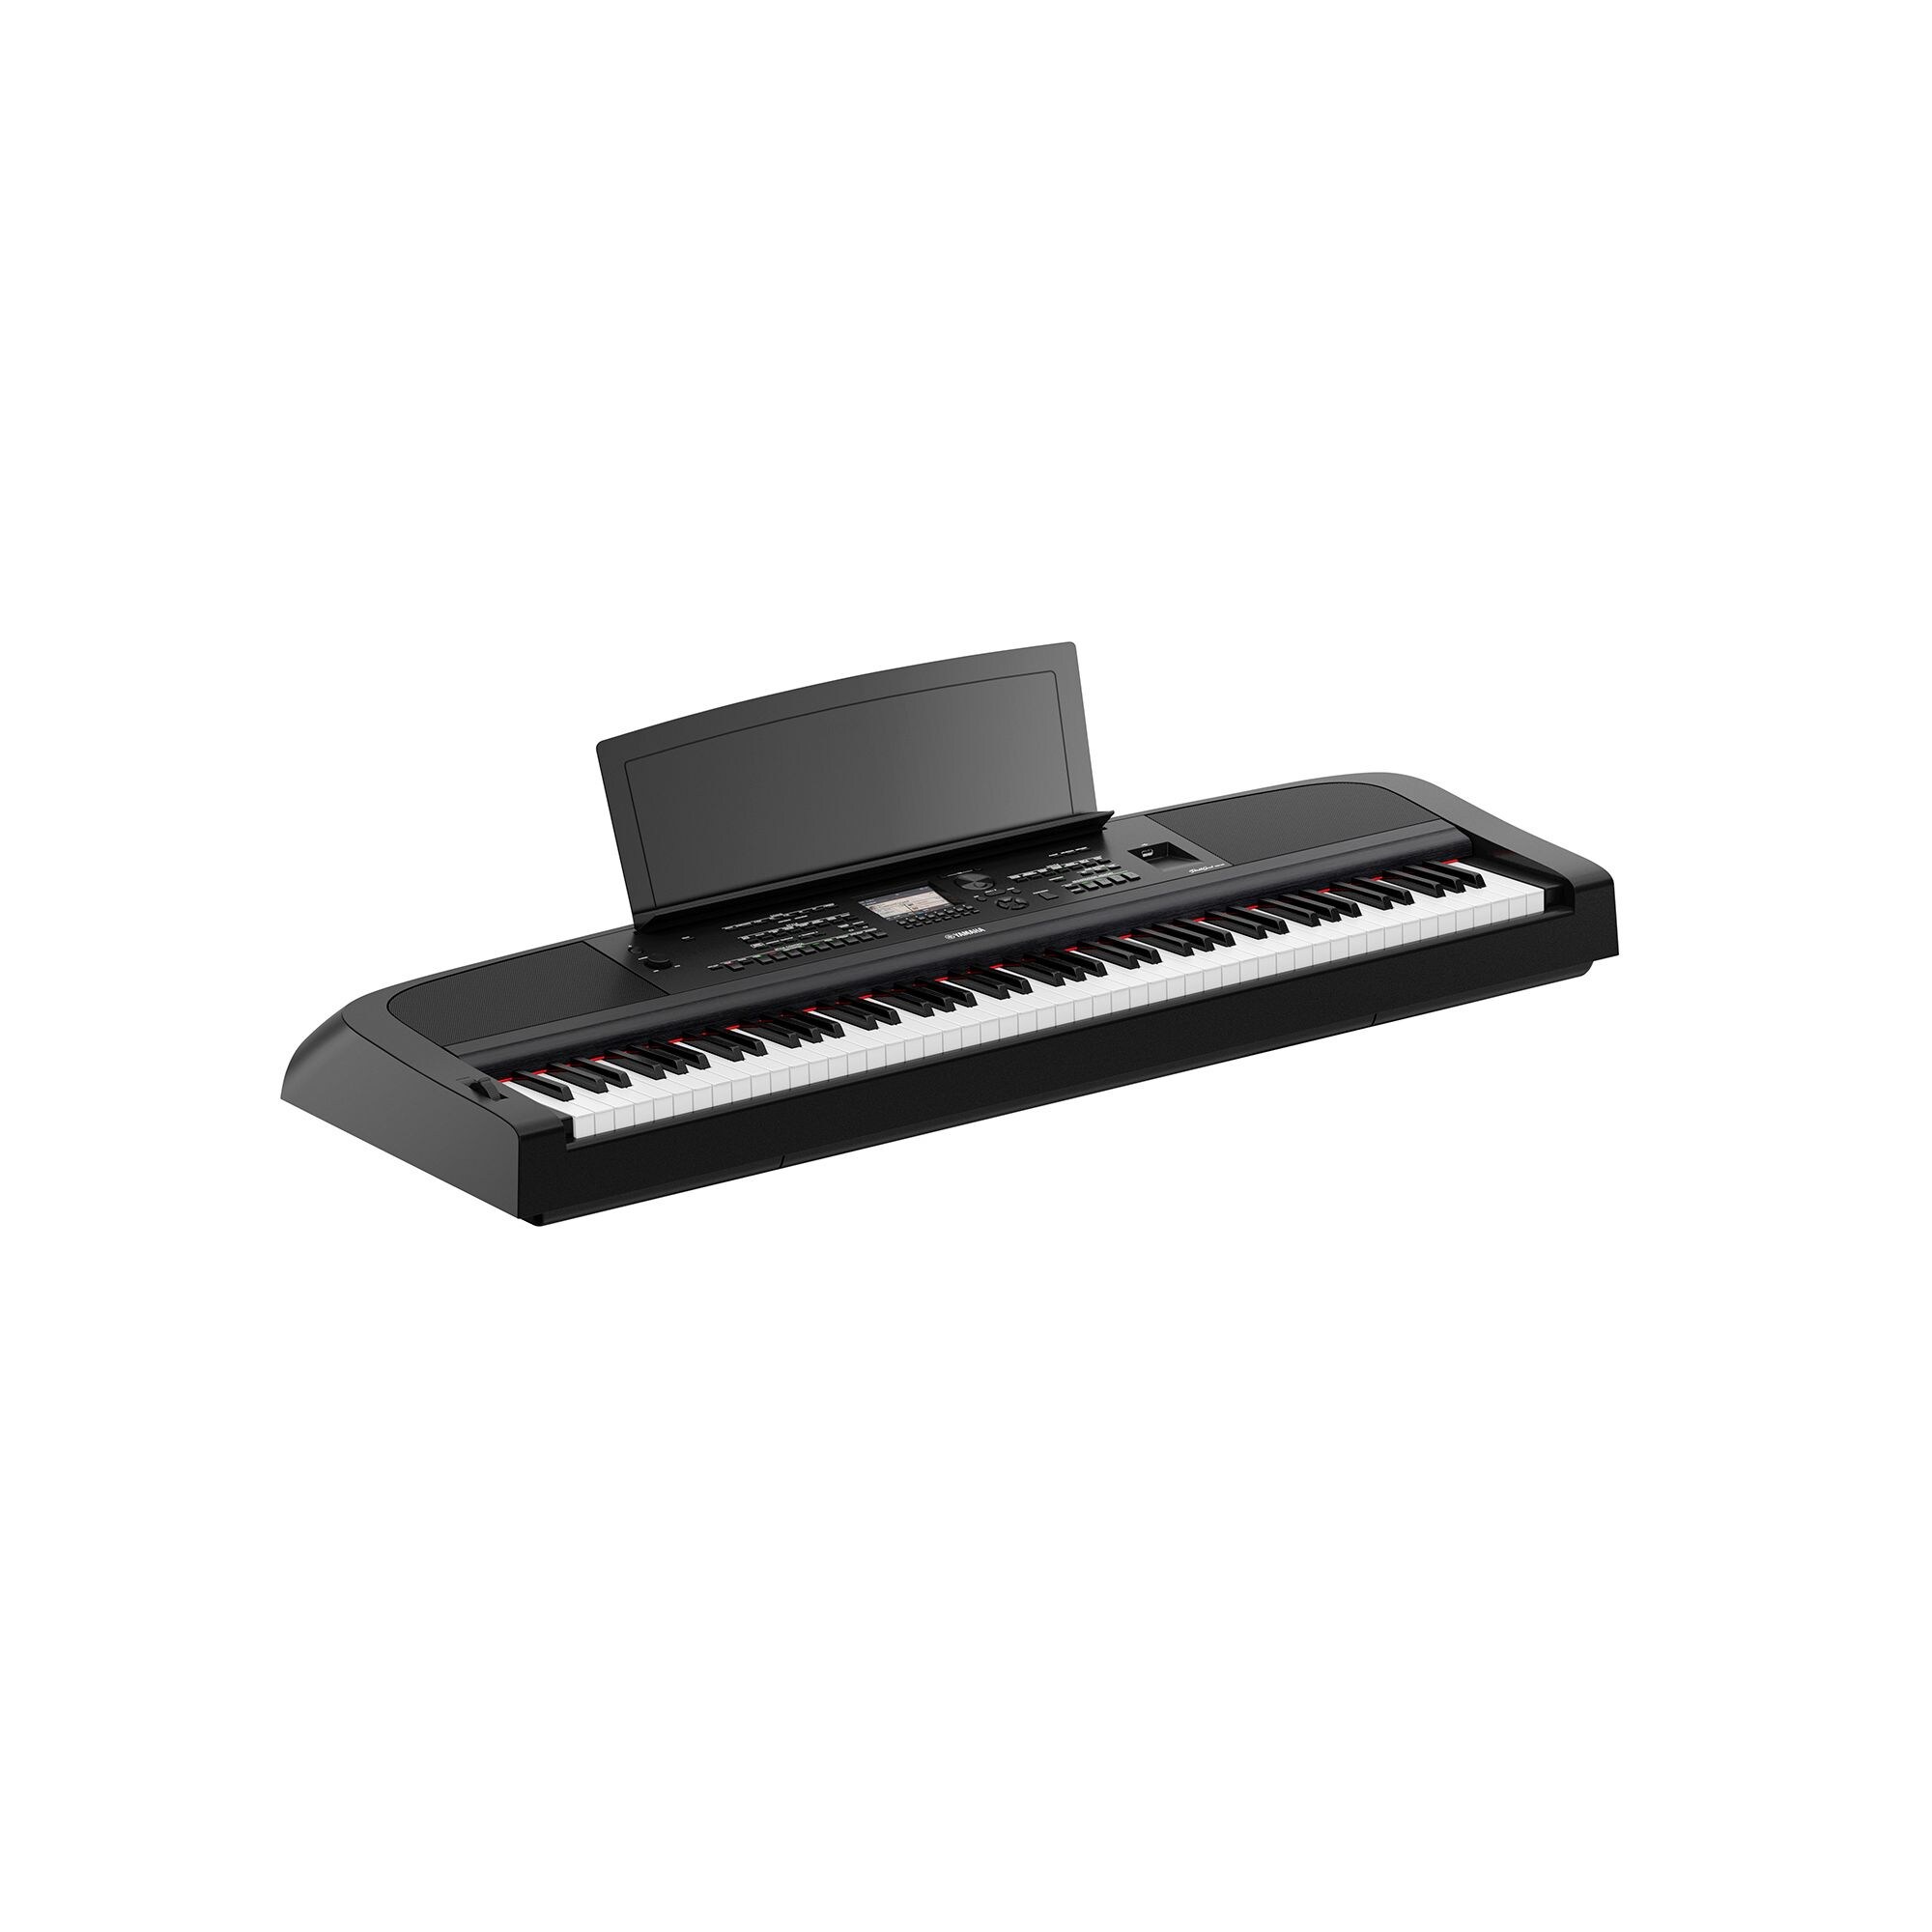 Childrens Piano Digital Professional Keyboard Piano Portable